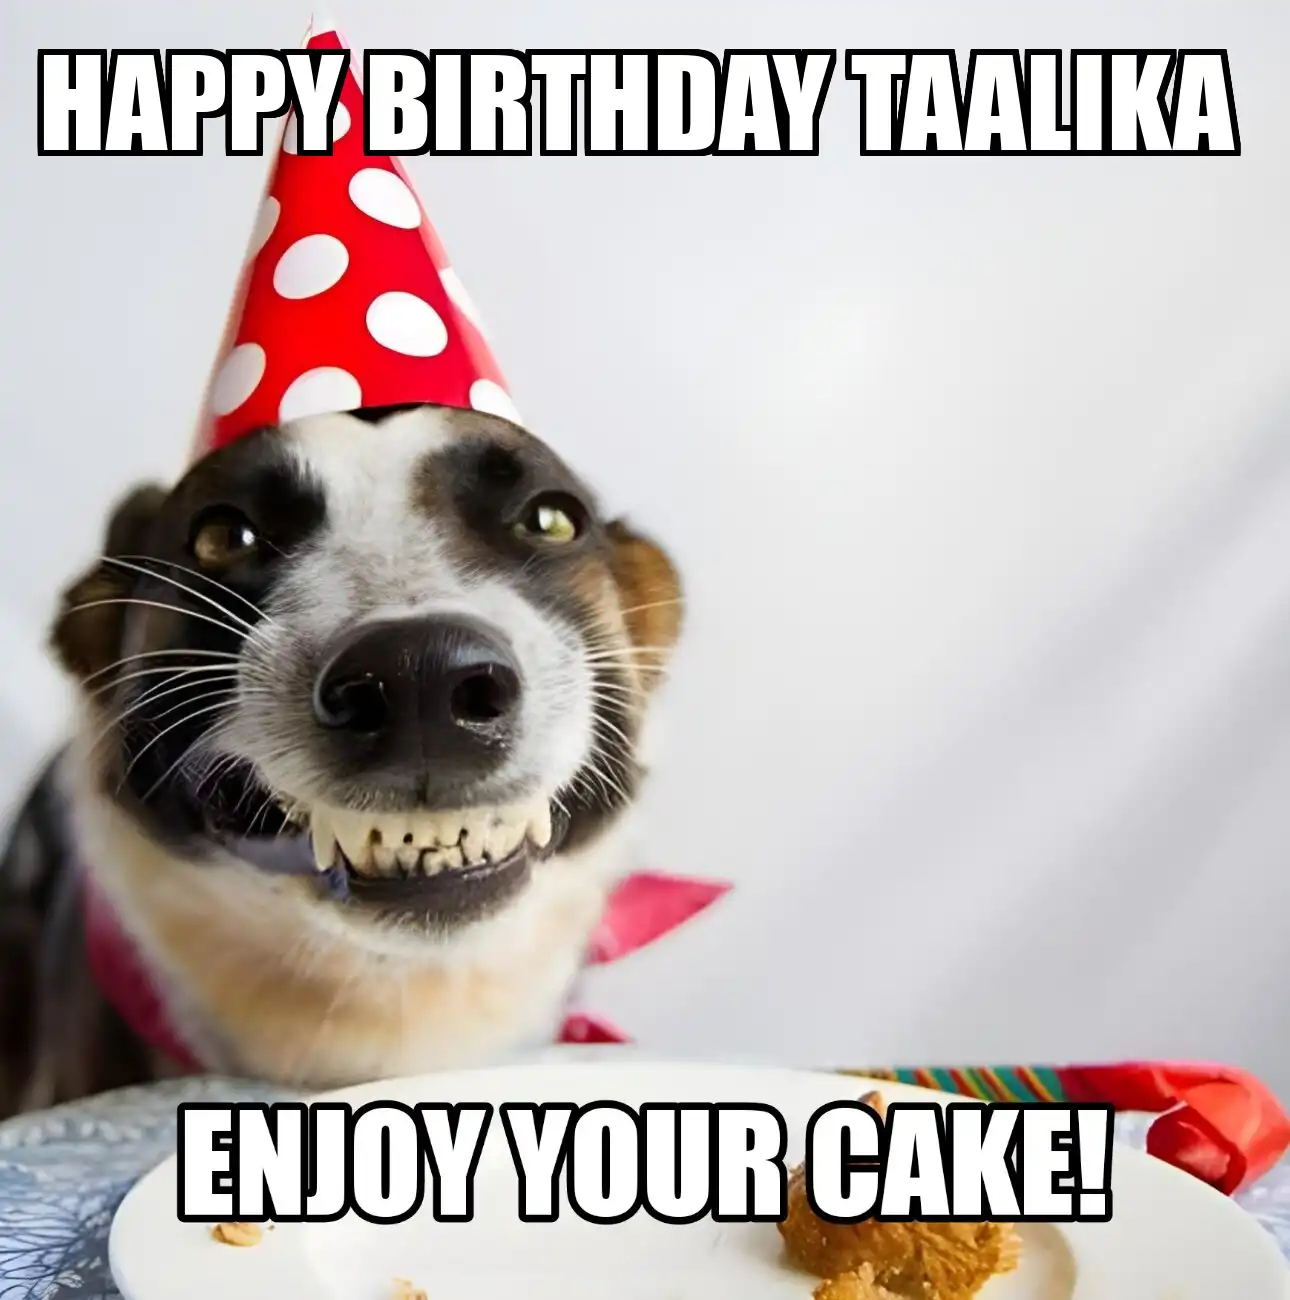 Happy Birthday Taalika Enjoy Your Cake Dog Meme